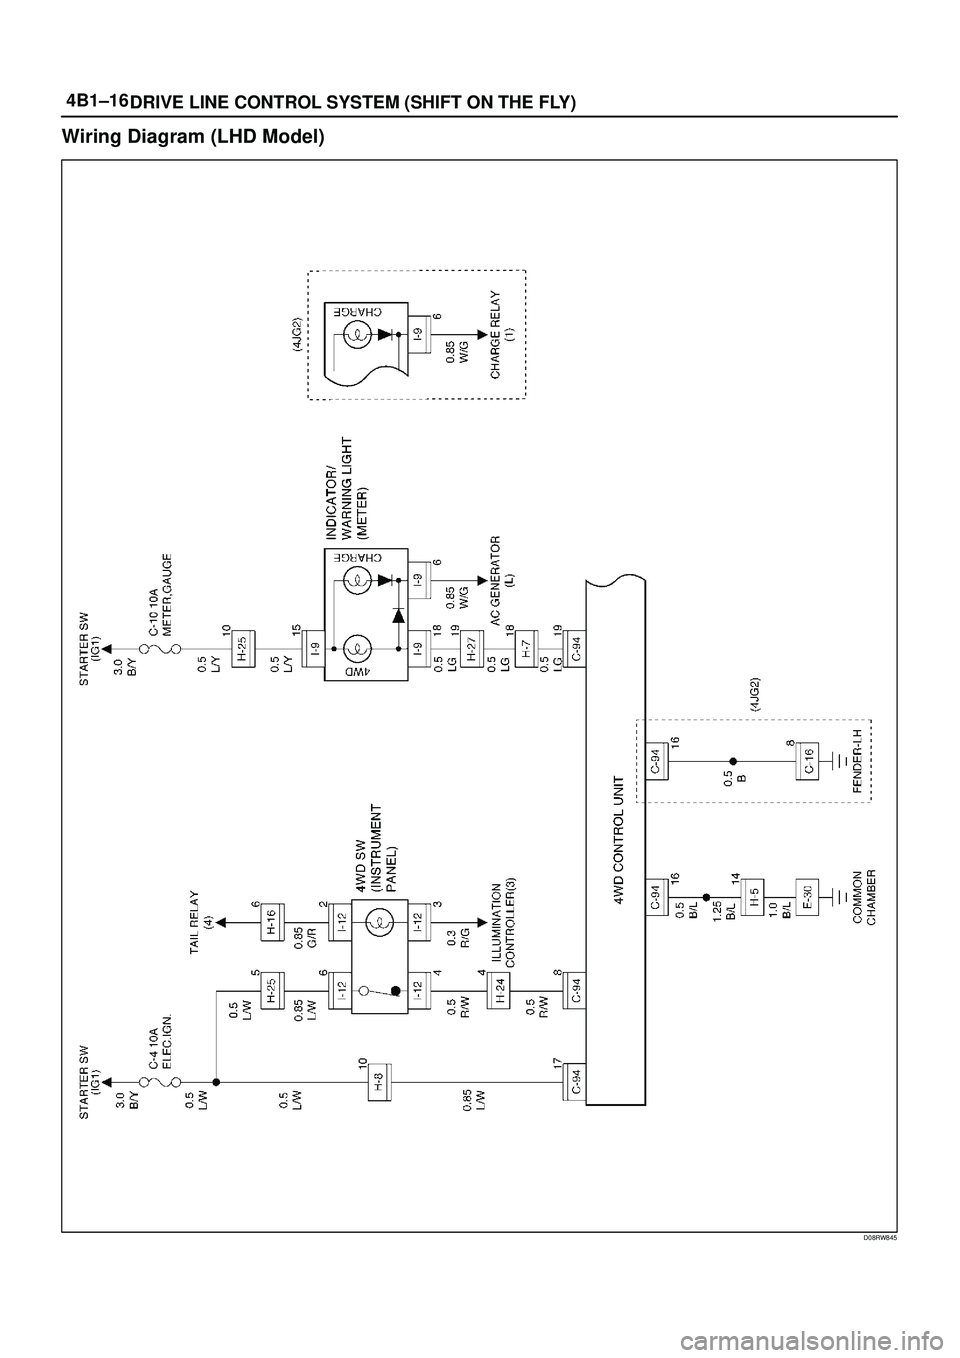 ISUZU TROOPER 1998  Service Repair Manual 4B1±16
DRIVE LINE CONTROL SYSTEM (SHIFT ON THE FLY)
Wiring Diagram (LHD Model)
D08RW845 